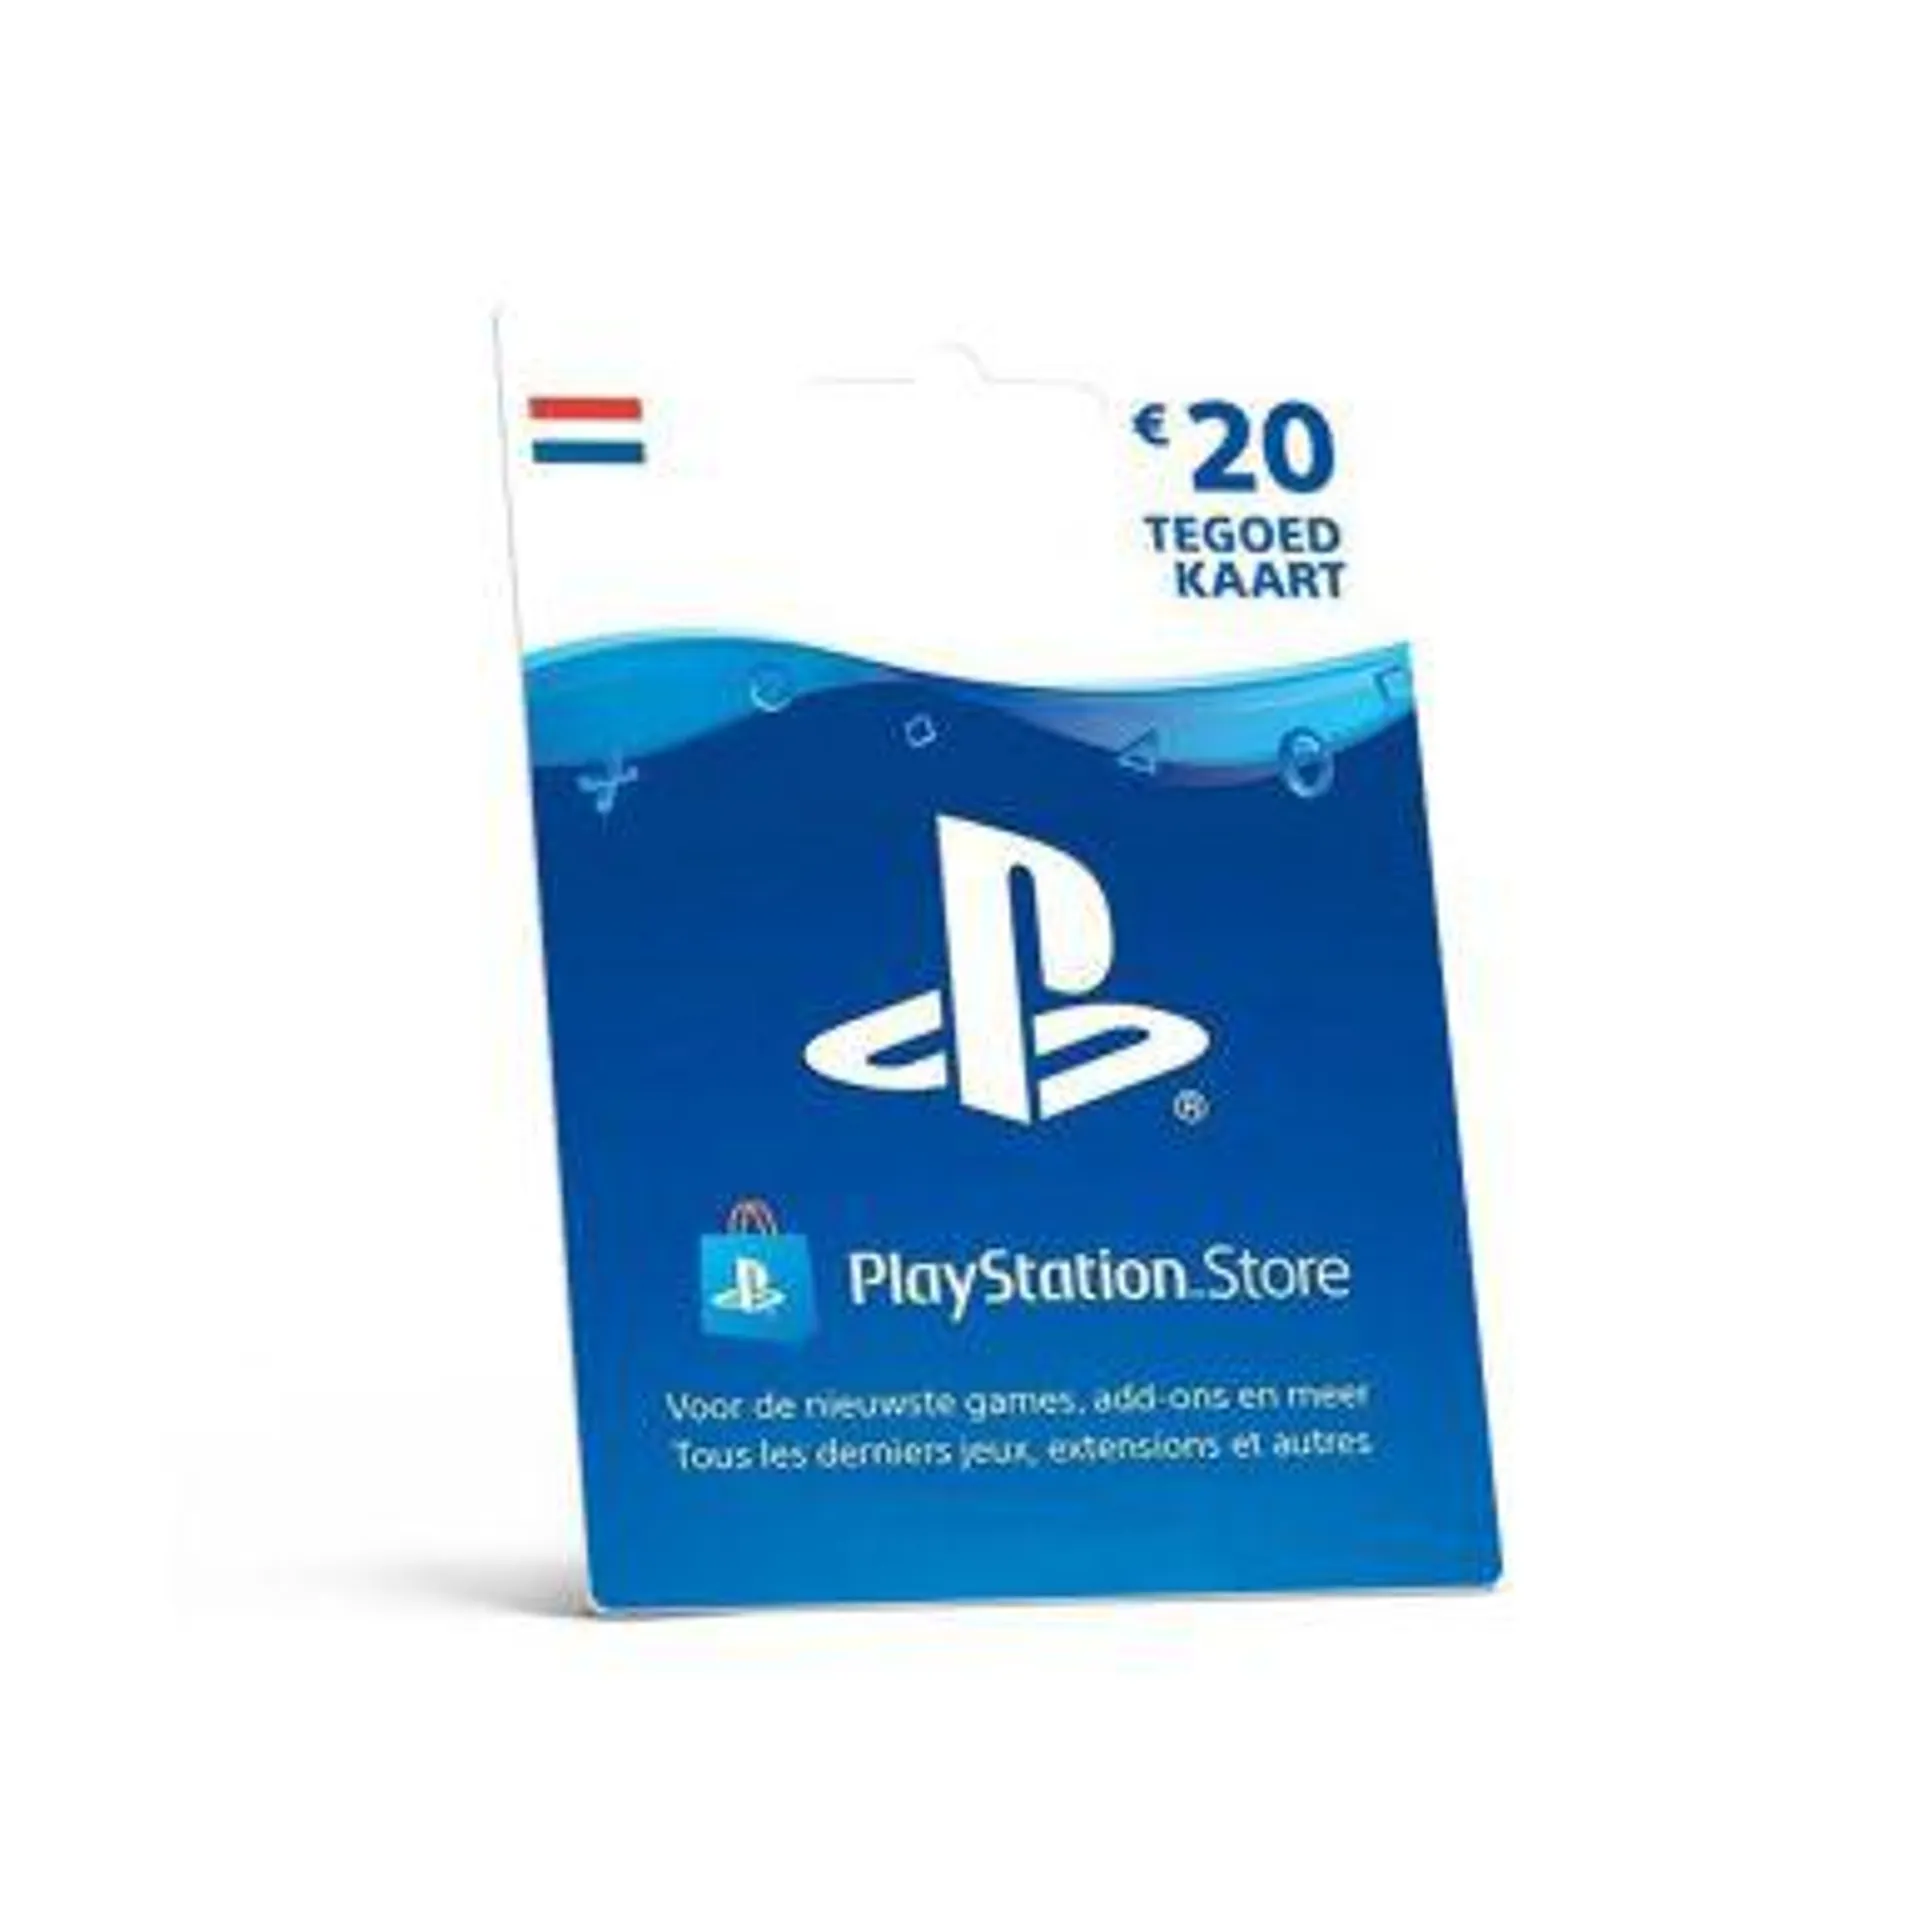 € 20,- PlayStation Network Card